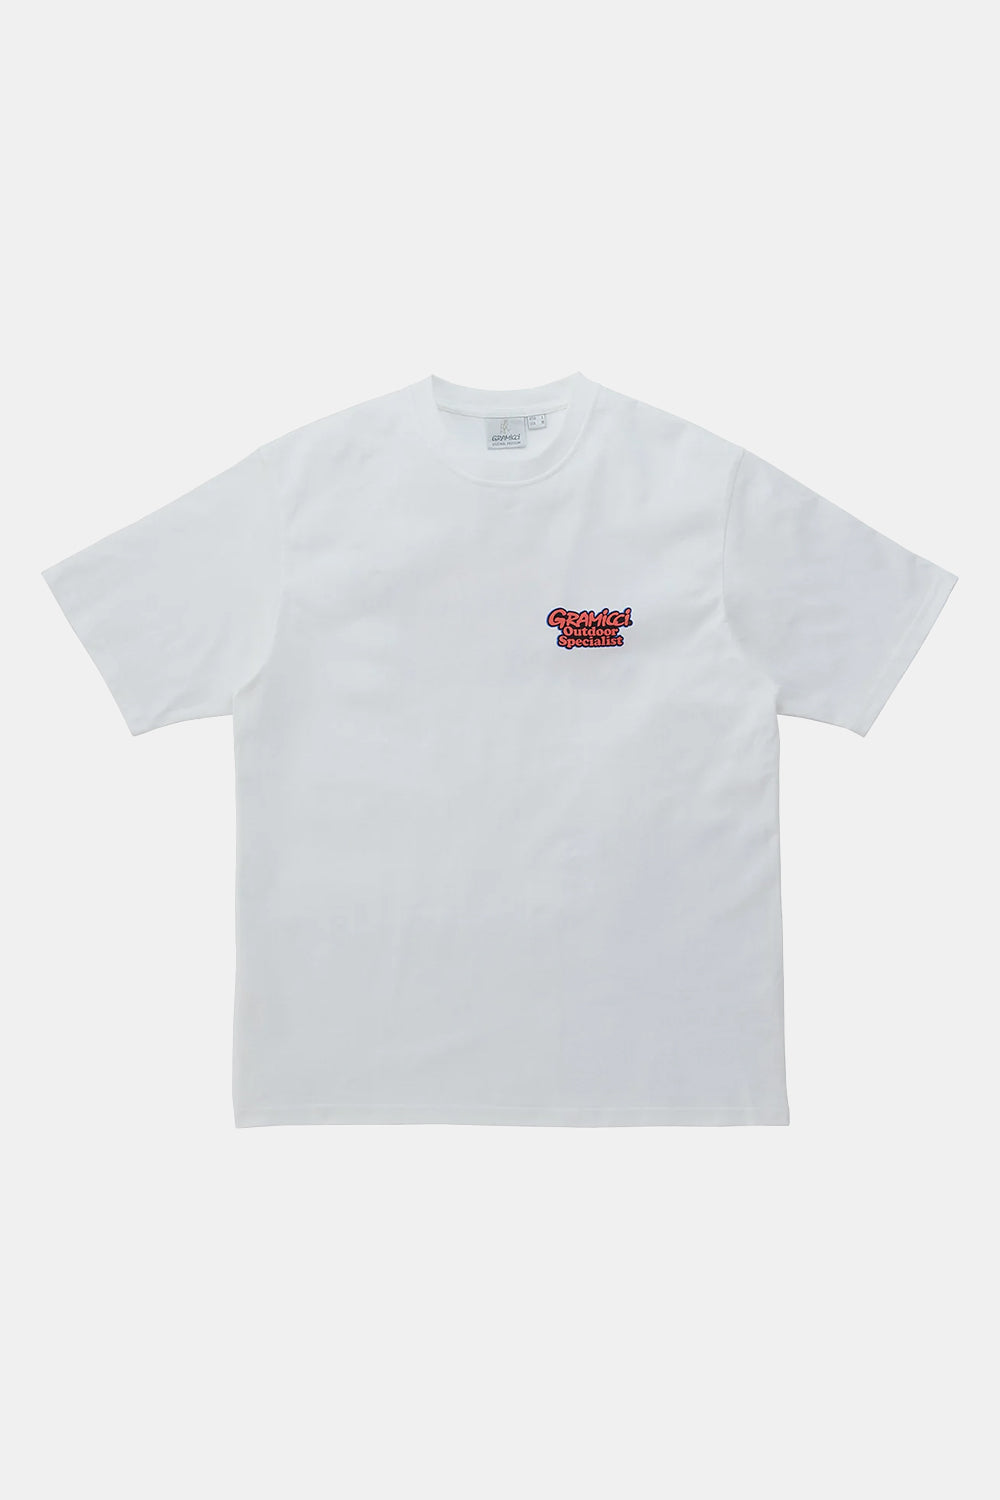 Gramicci Outdoor Specialist T-shirt (hvid)